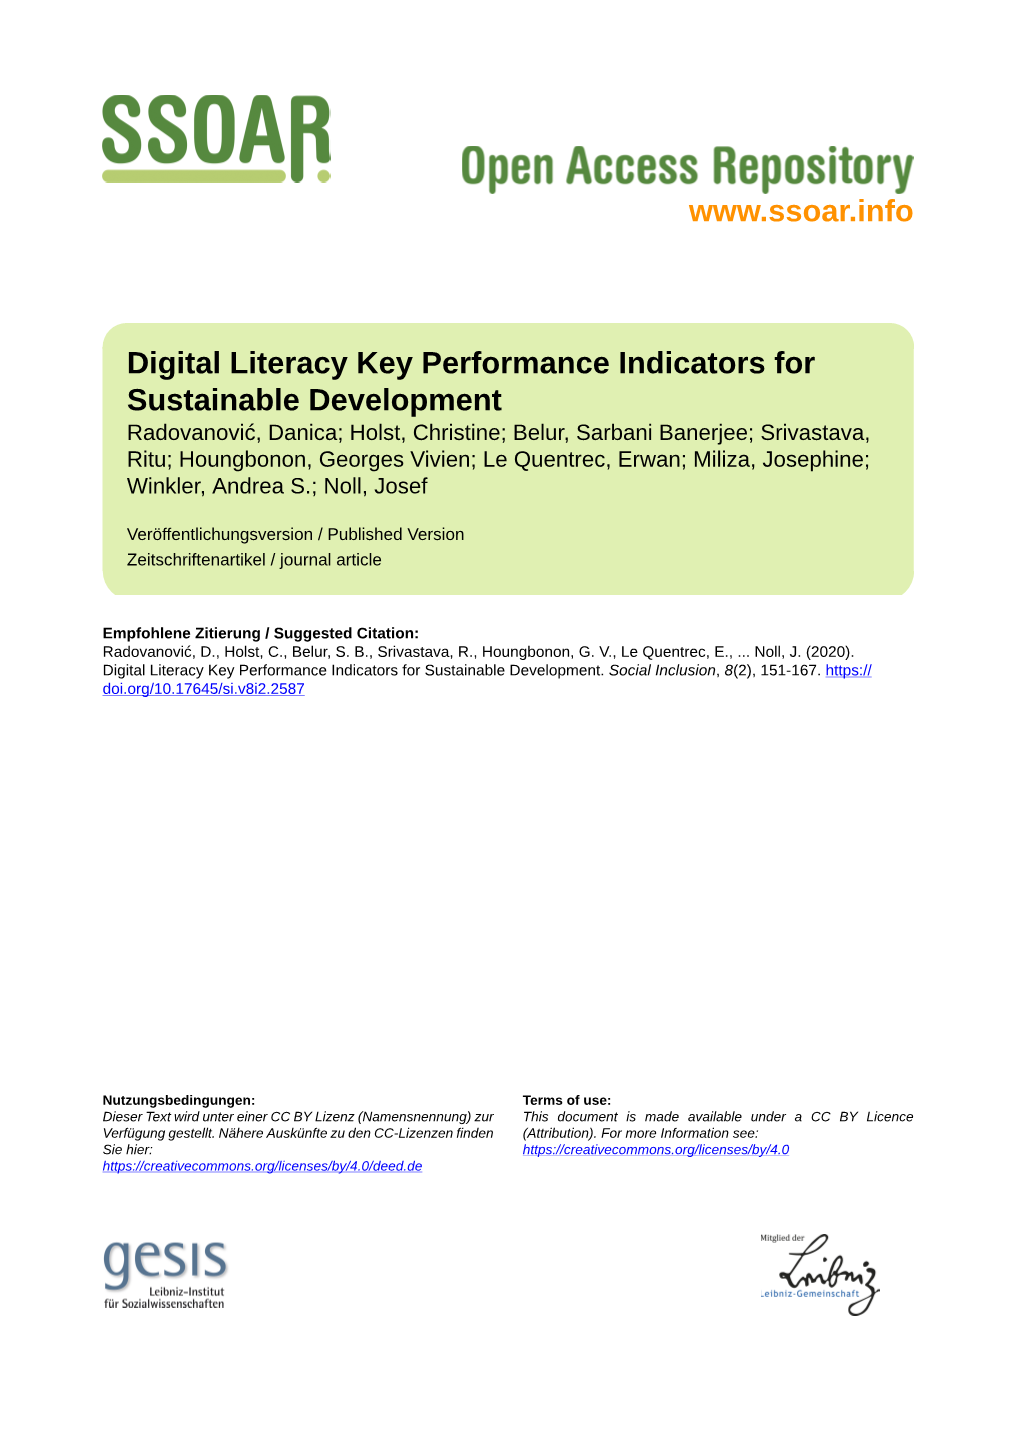 Digital Literacy Key Performance Indicators for Sustainable